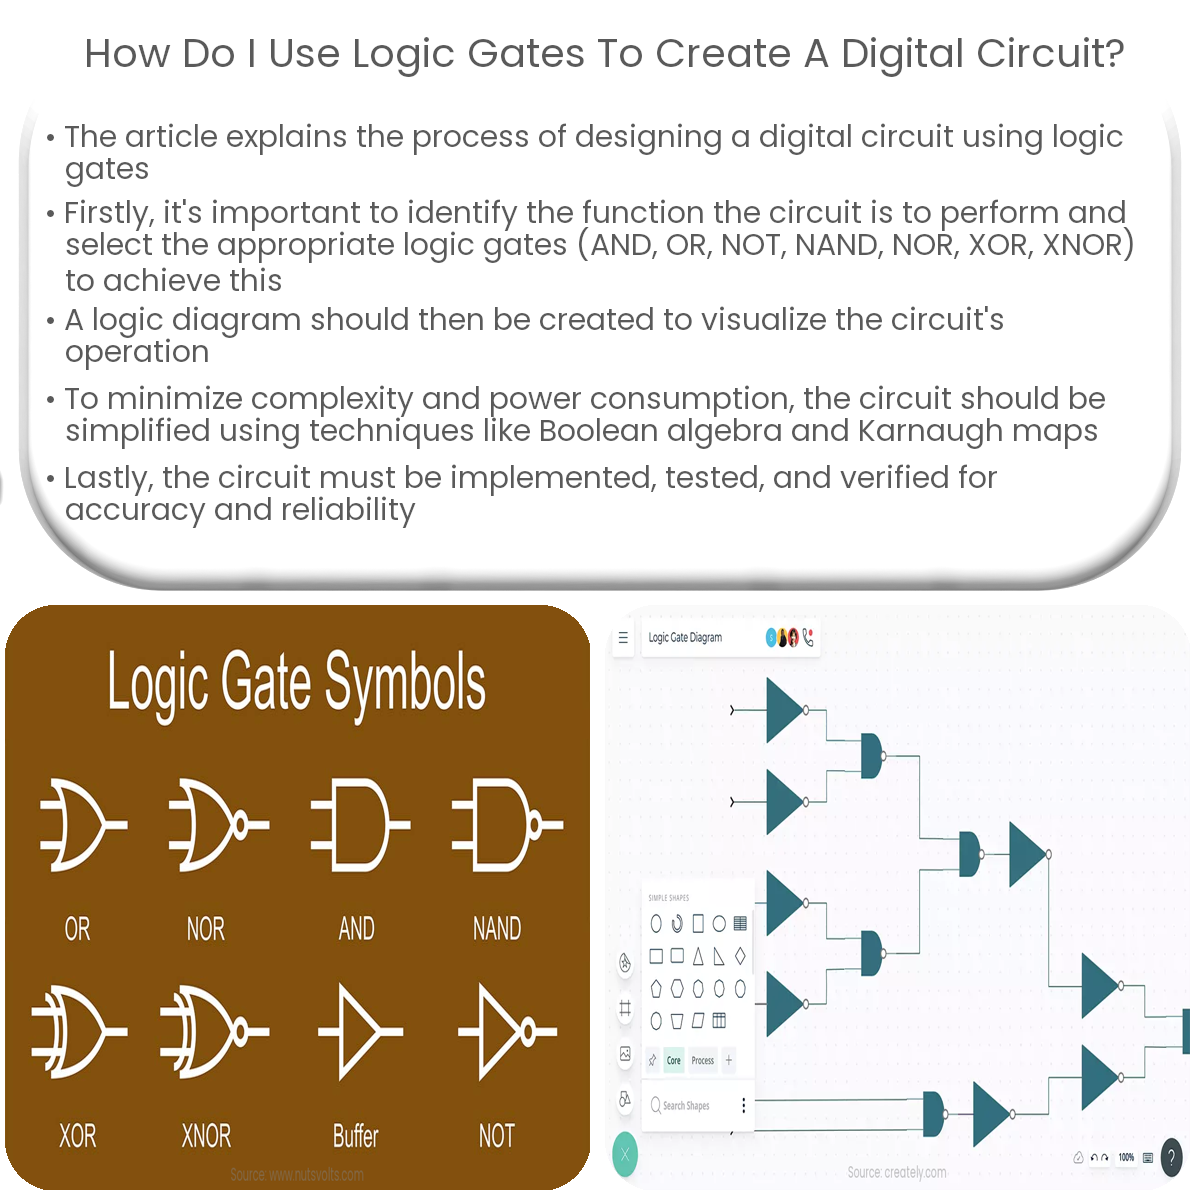 How do I use logic gates to create a digital circuit?